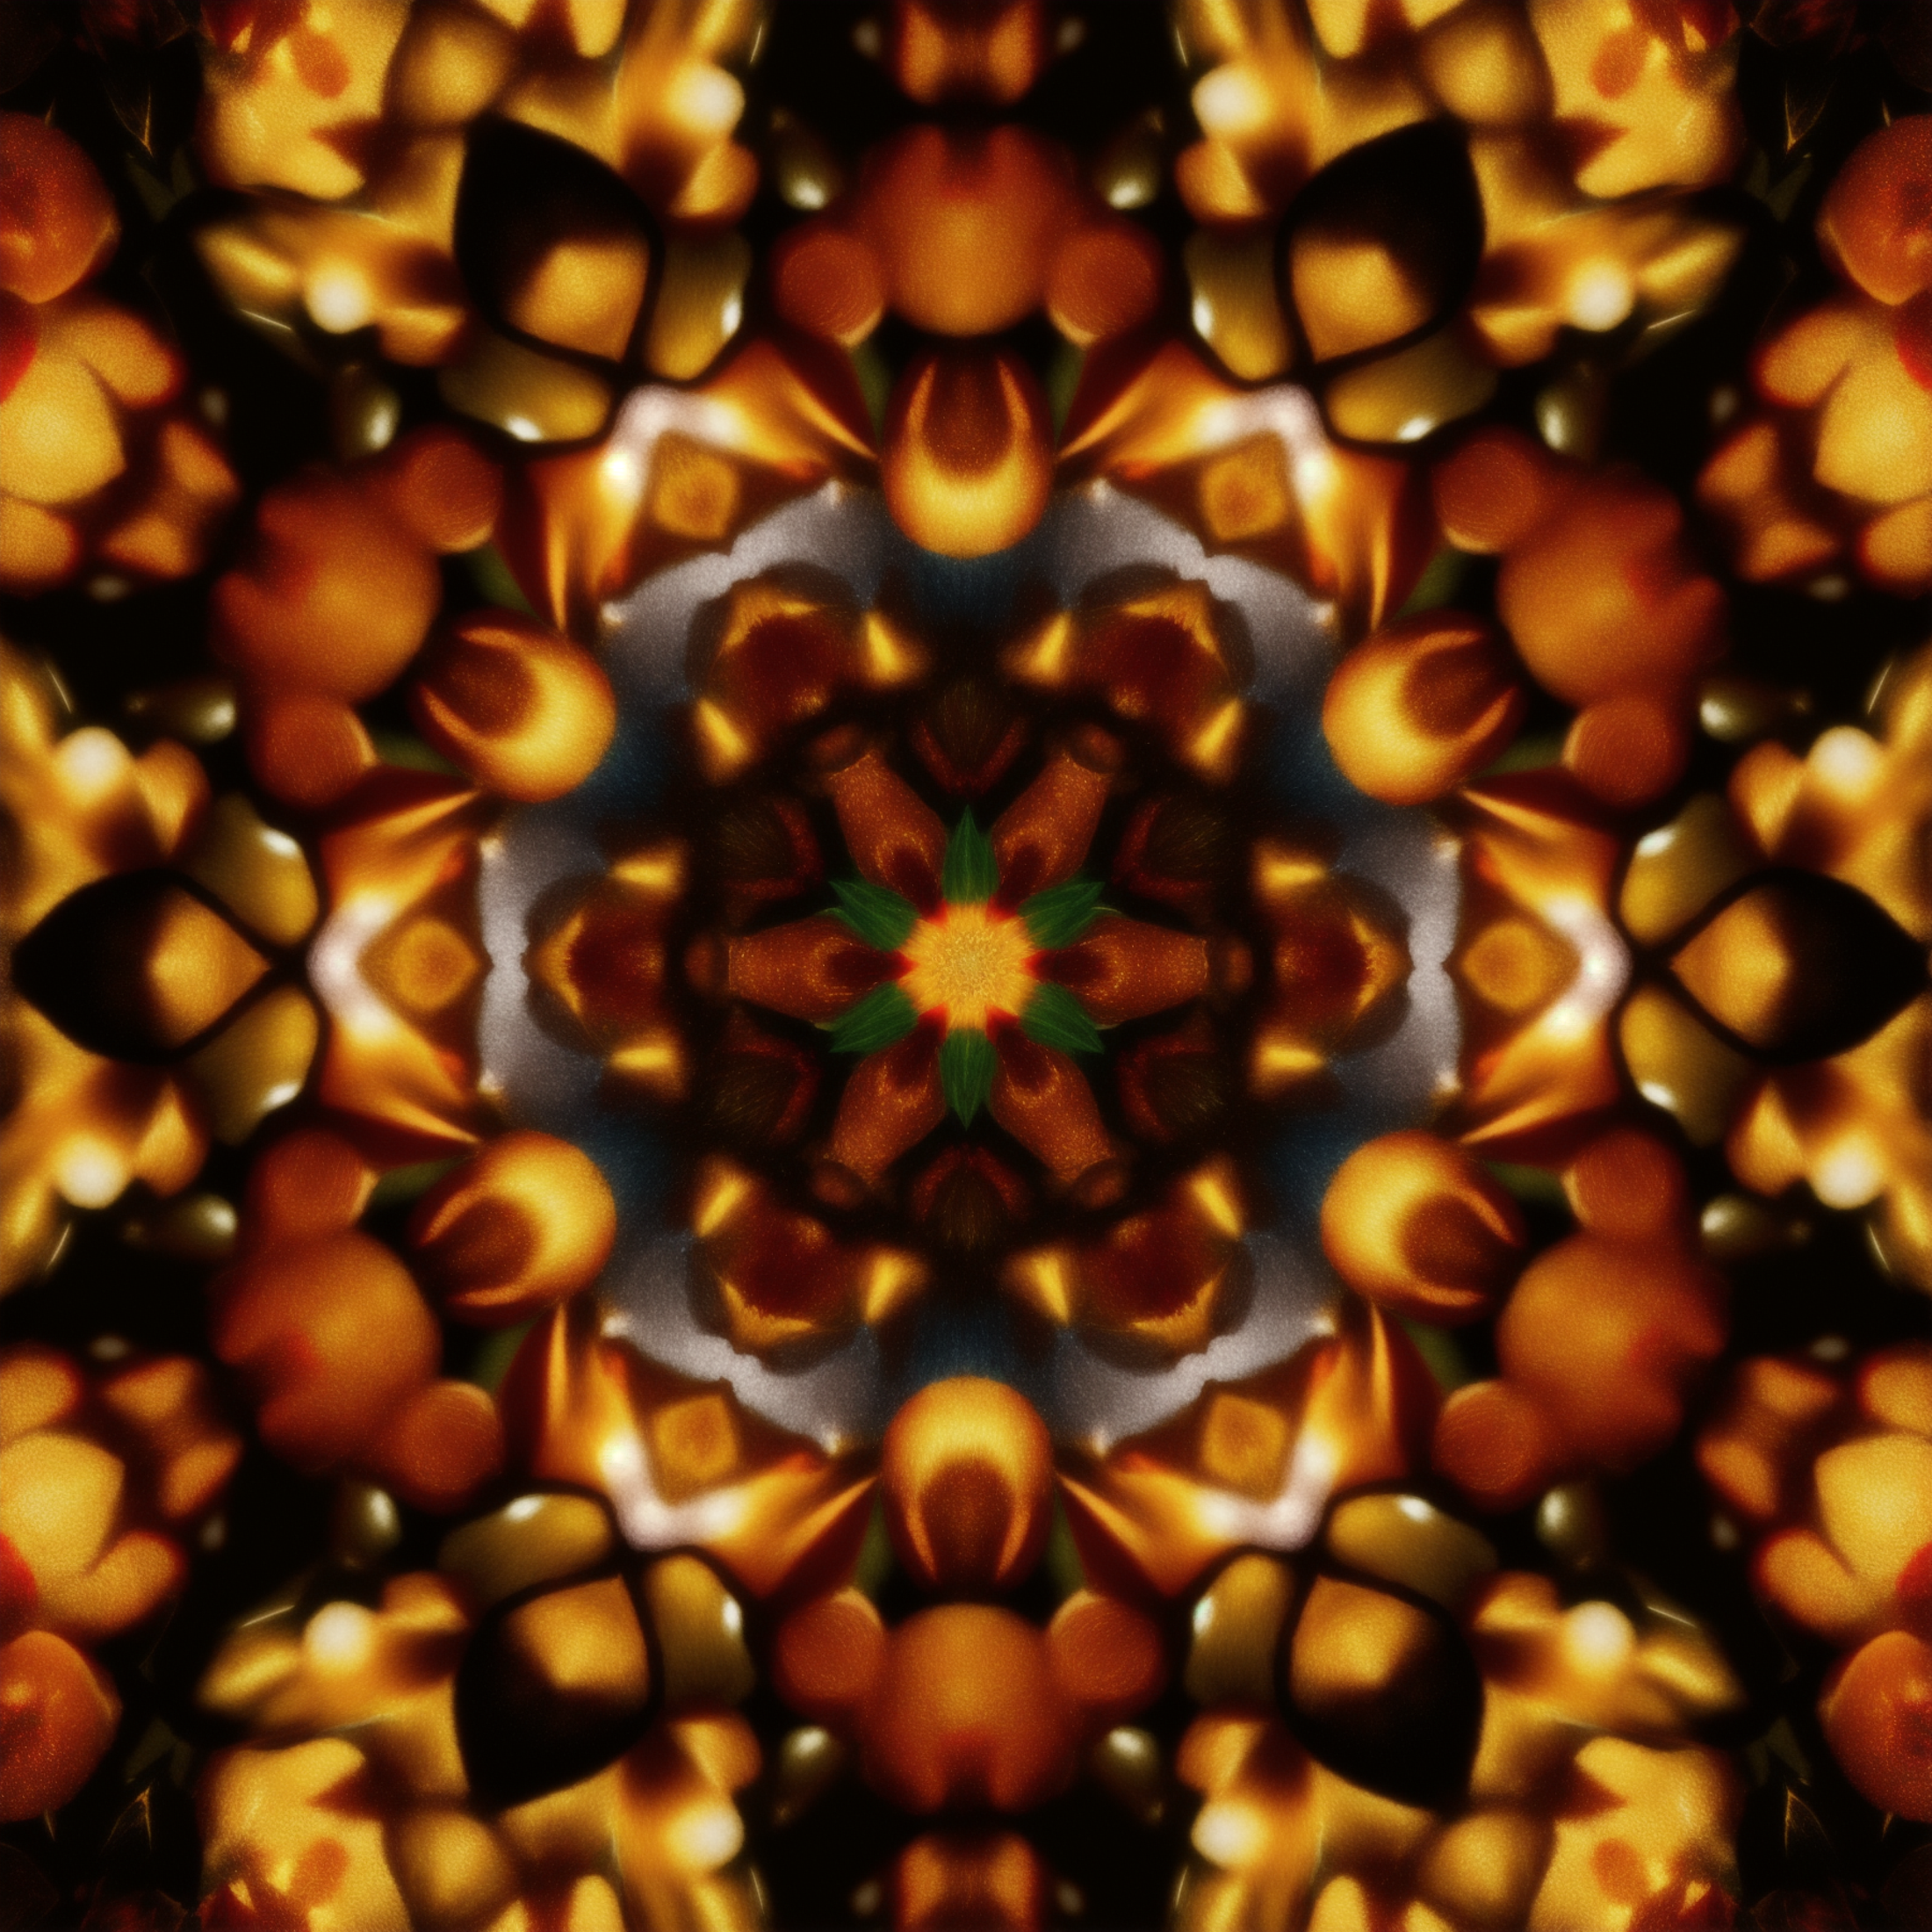 Kaleidoscope image by alexds9